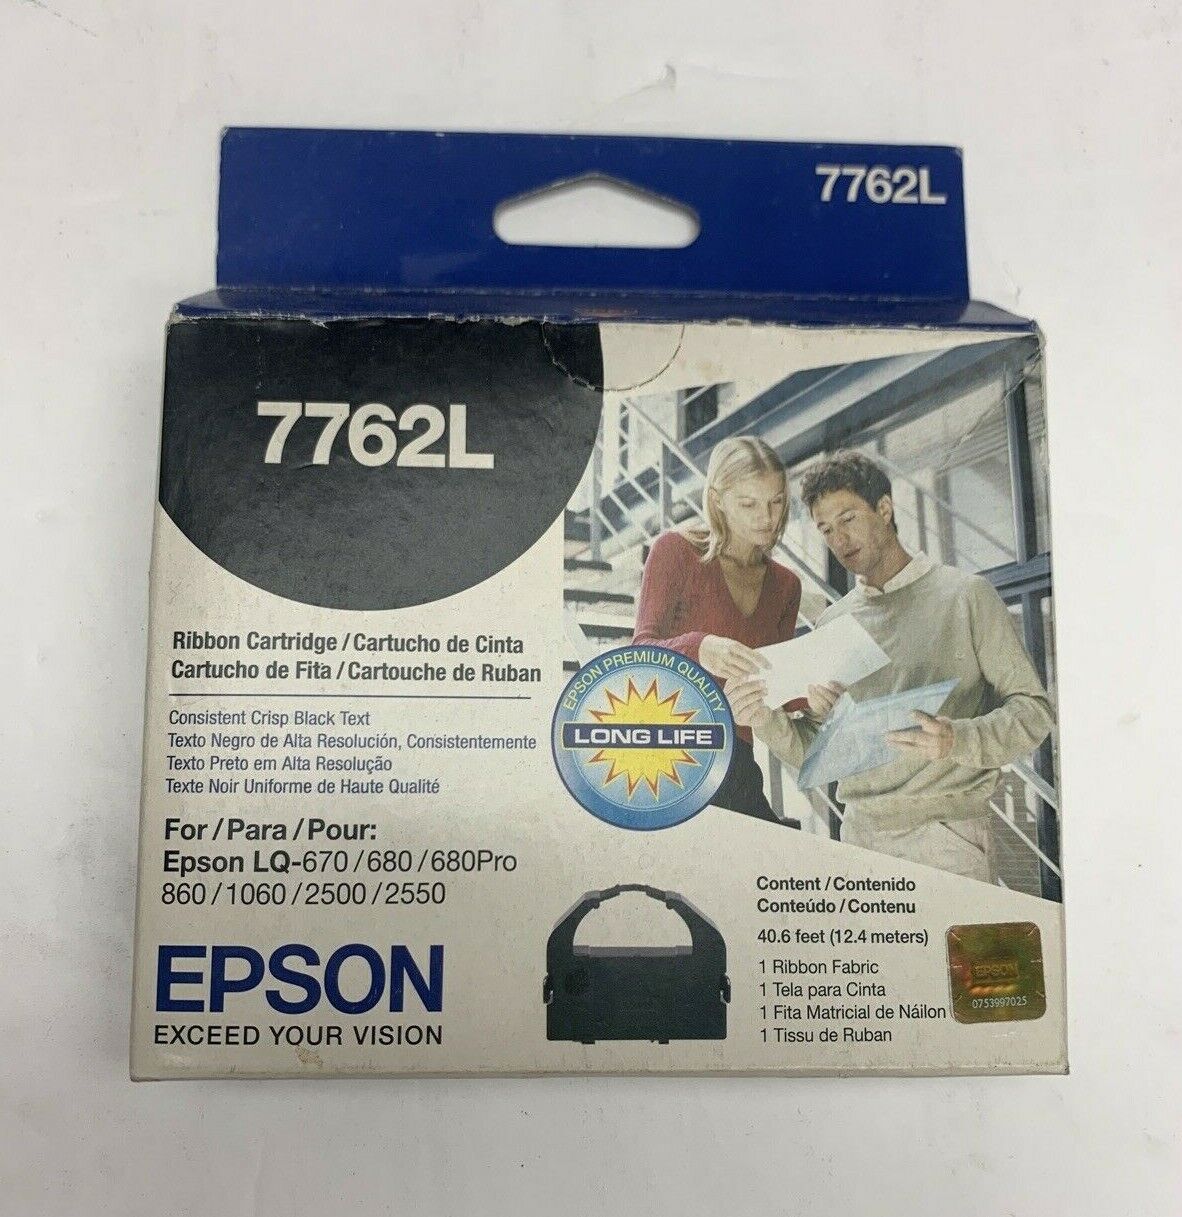 New Genuine Epson Ribbon Cartridge 7753 For LQ-200 300 500 870 L1000 3000 4000